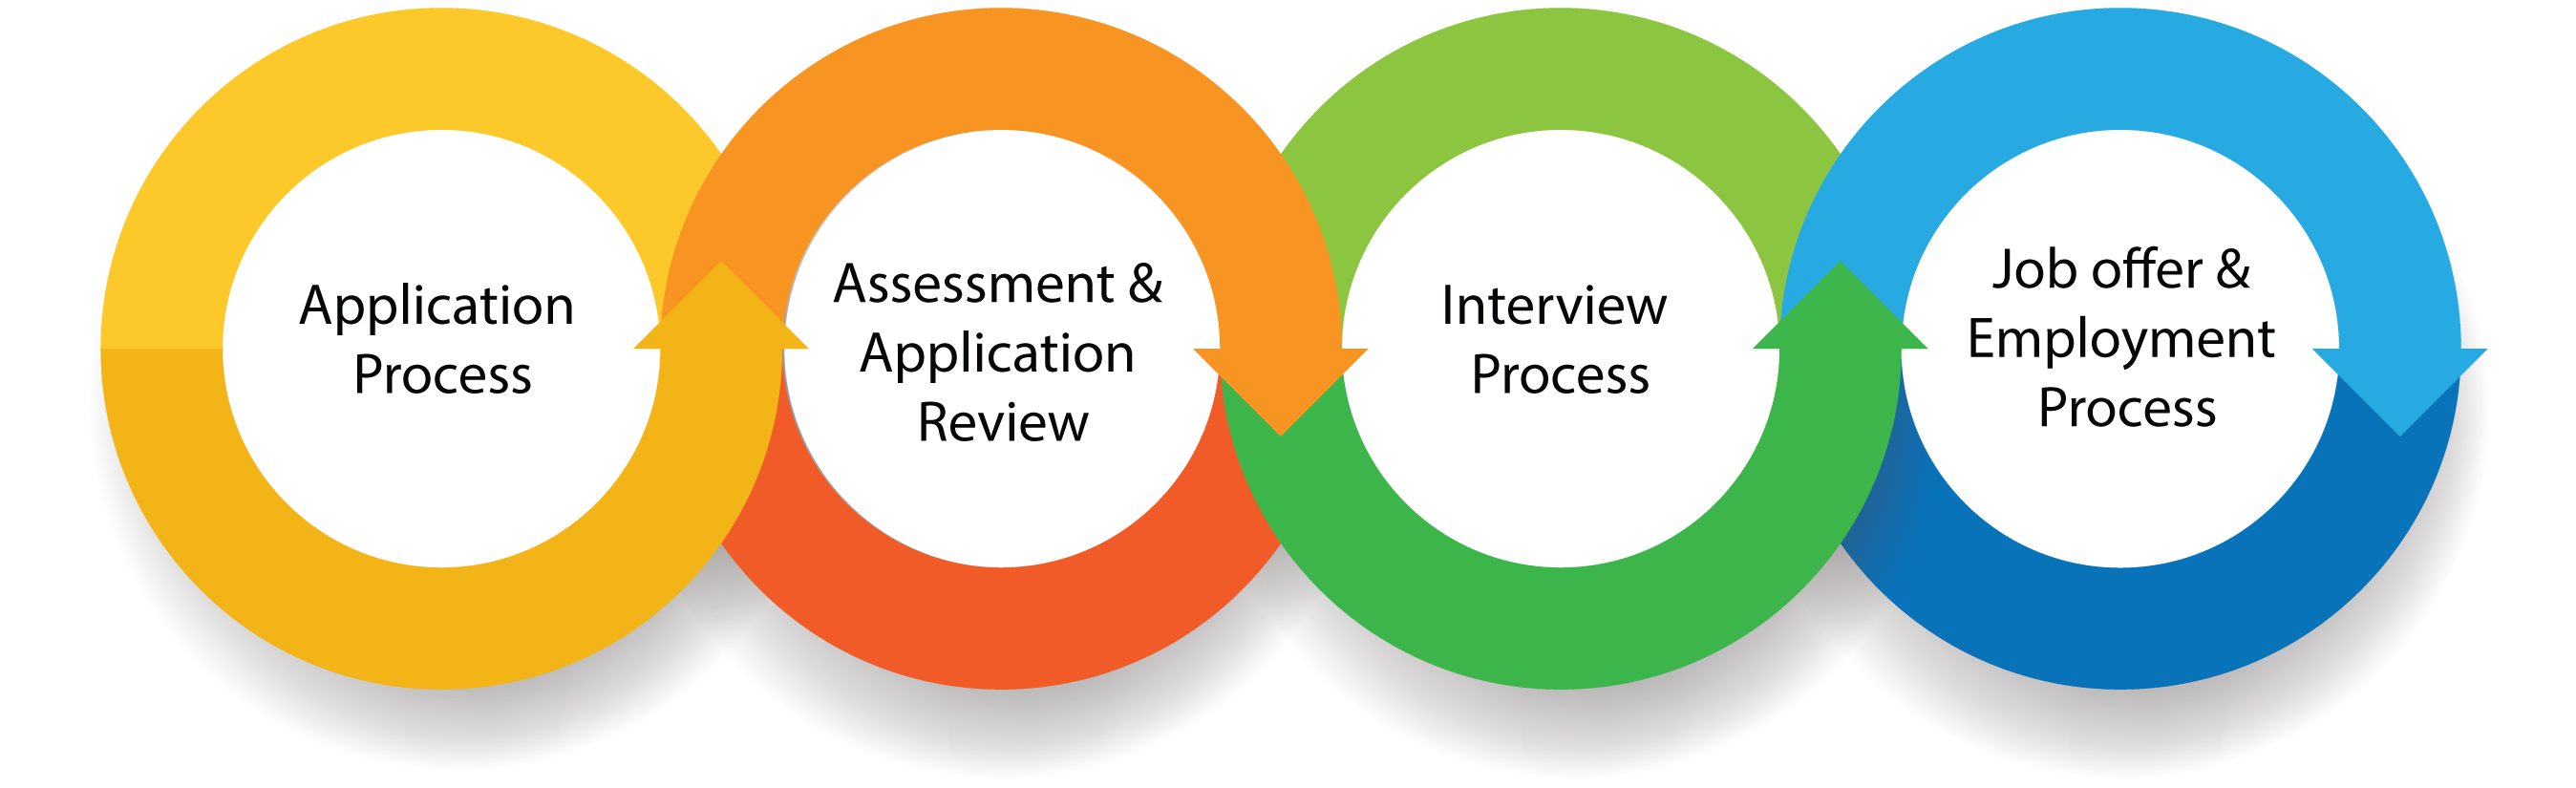 Www process. Application process. Hiring process. Assessment process. Процесс рекрутмента.